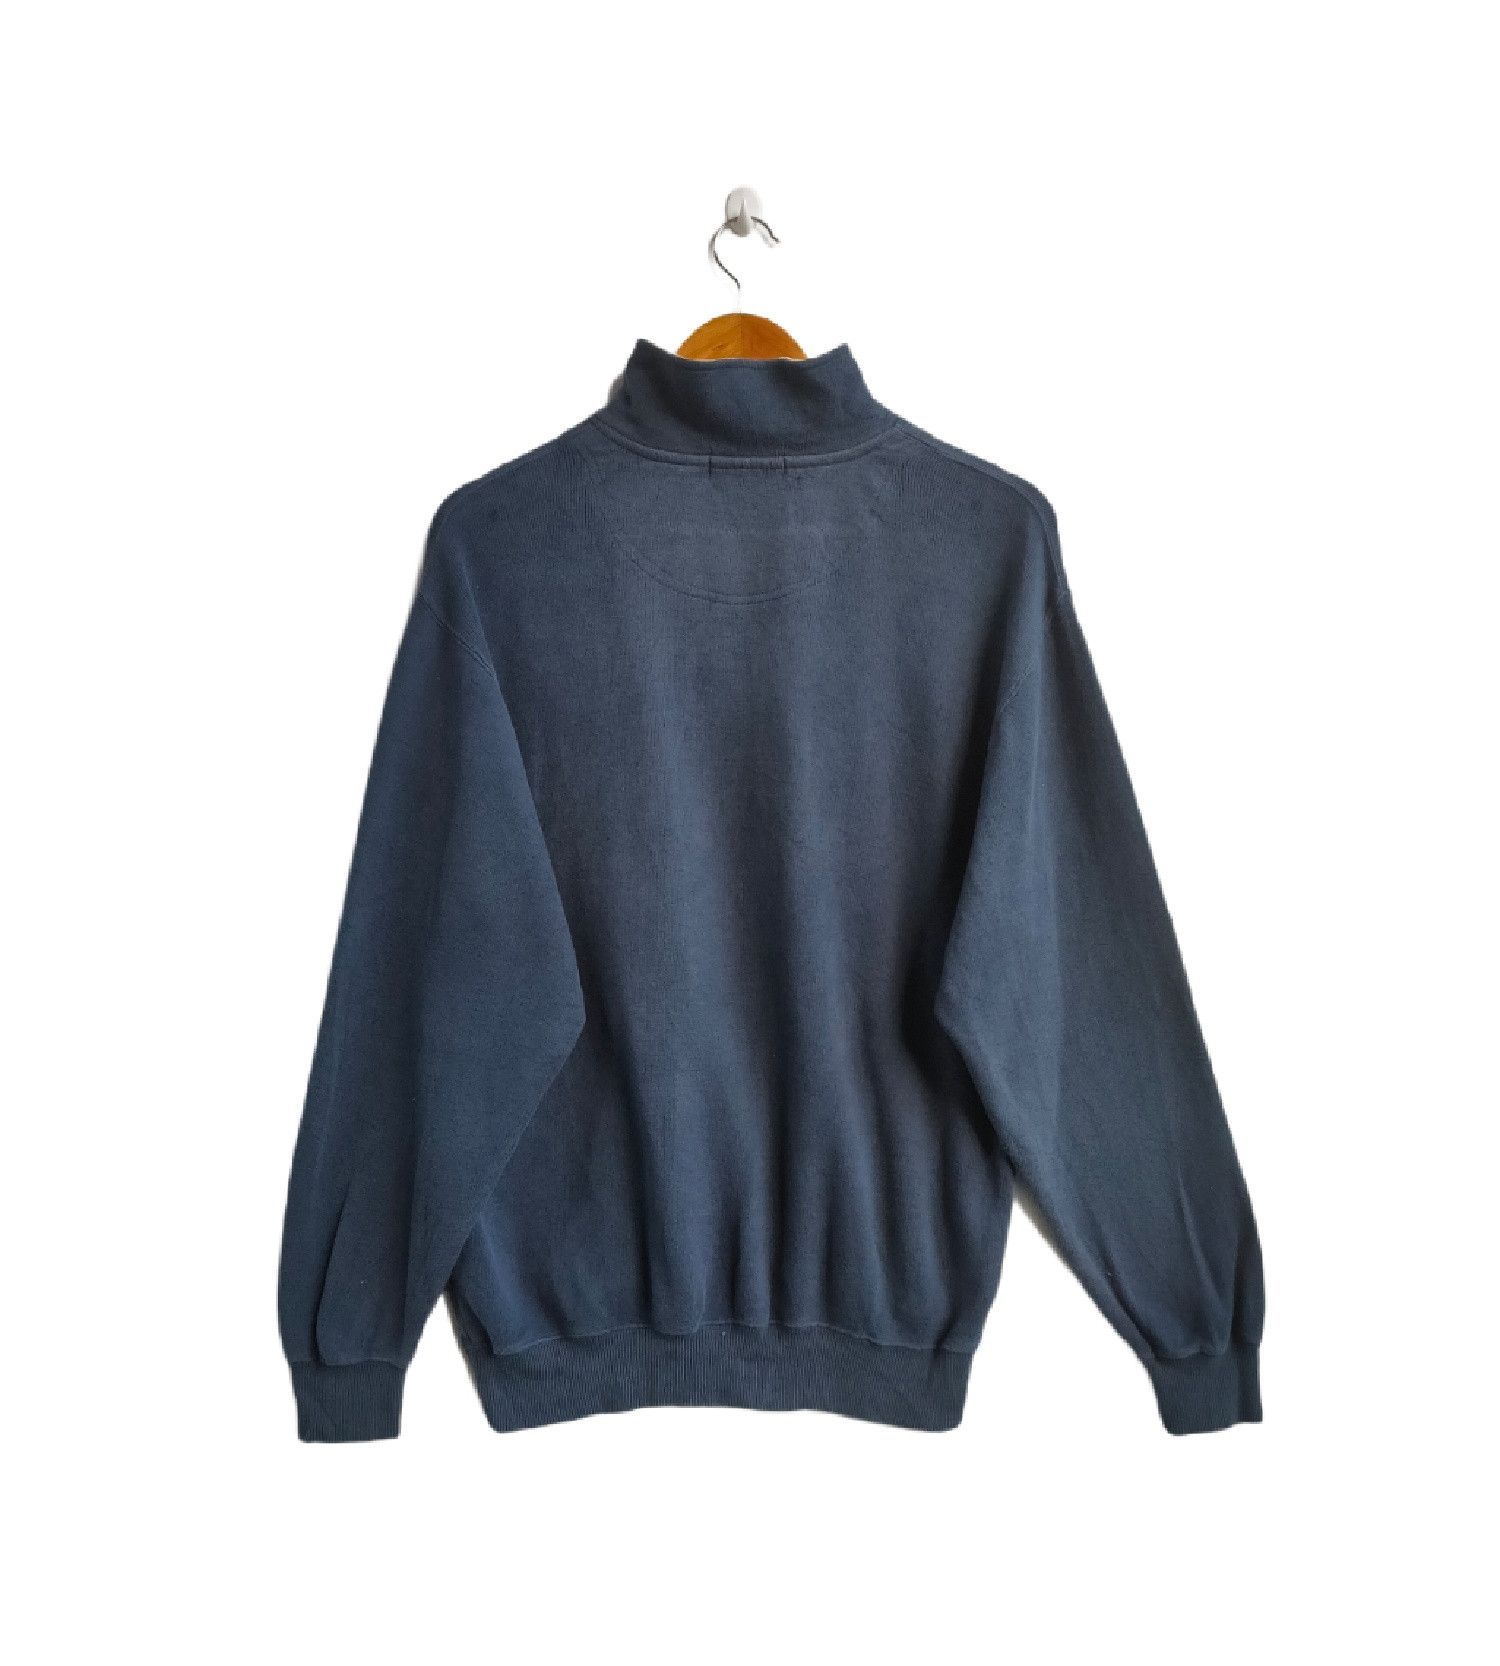 Vintage RARE! Vintage Sweatshirt Gianni Valentino Italy Pullover Size US M / EU 48-50 / 2 - 2 Preview